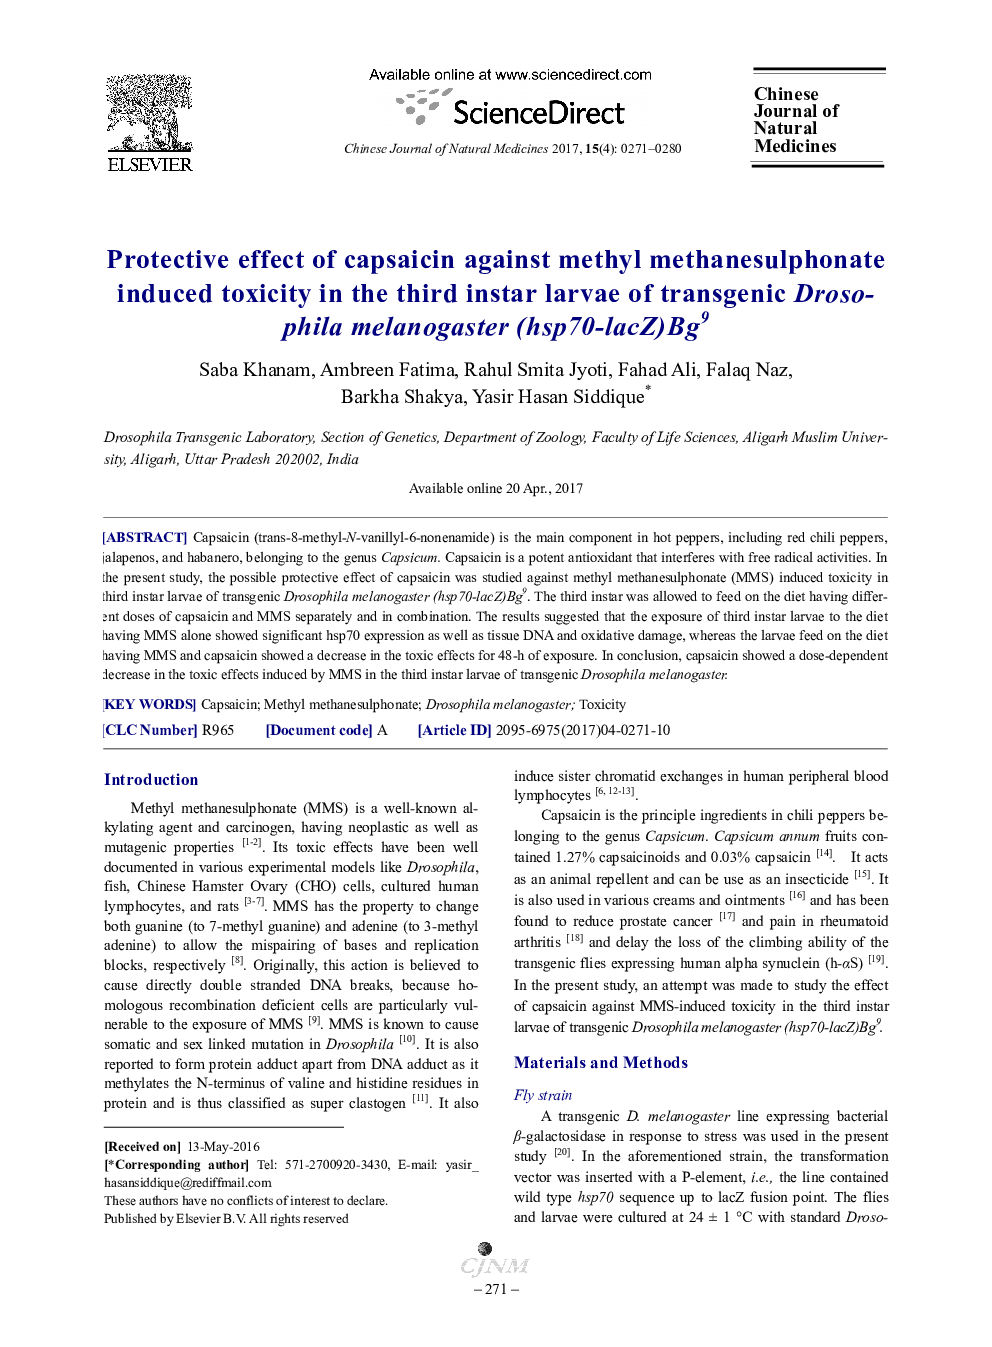 Protective effect of capsaicin against methyl methanesulphonate induced toxicity in the third instar larvae of transgenic Drosophila melanogaster (hsp70-lacZ)Bg9